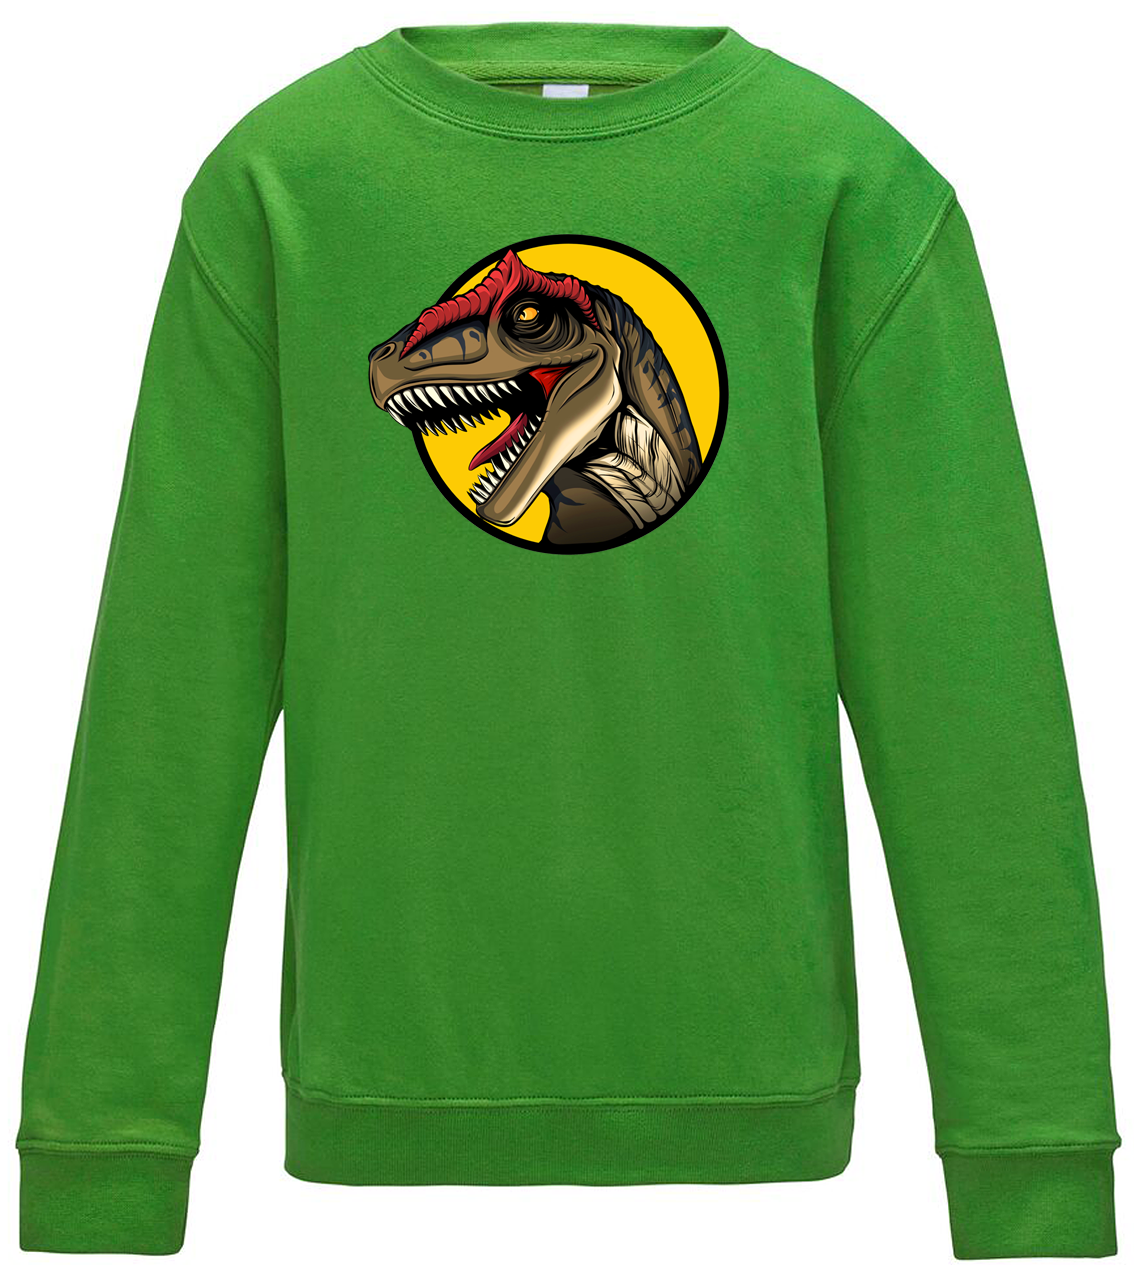 Dětská mikina s dinosaurem - Allosaurus Velikost: 9/11 (134/146), Barva: Zelená